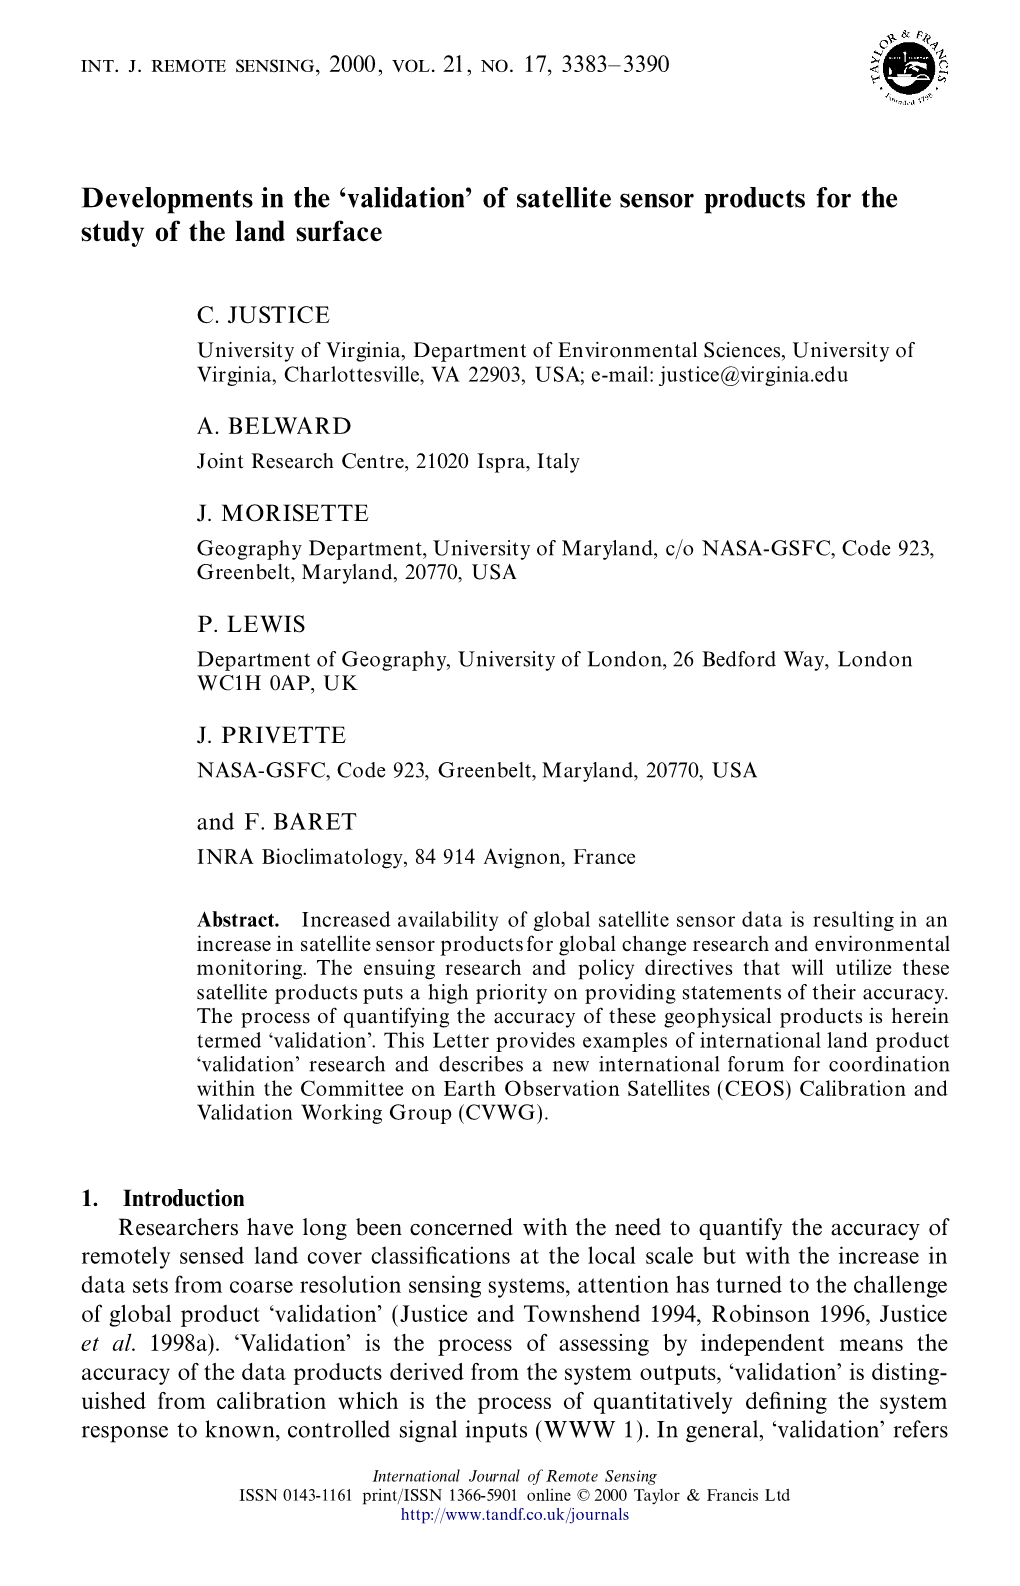 International Journal Remote Sensing, 2000, Vol. 21, No.17, 3383-3390